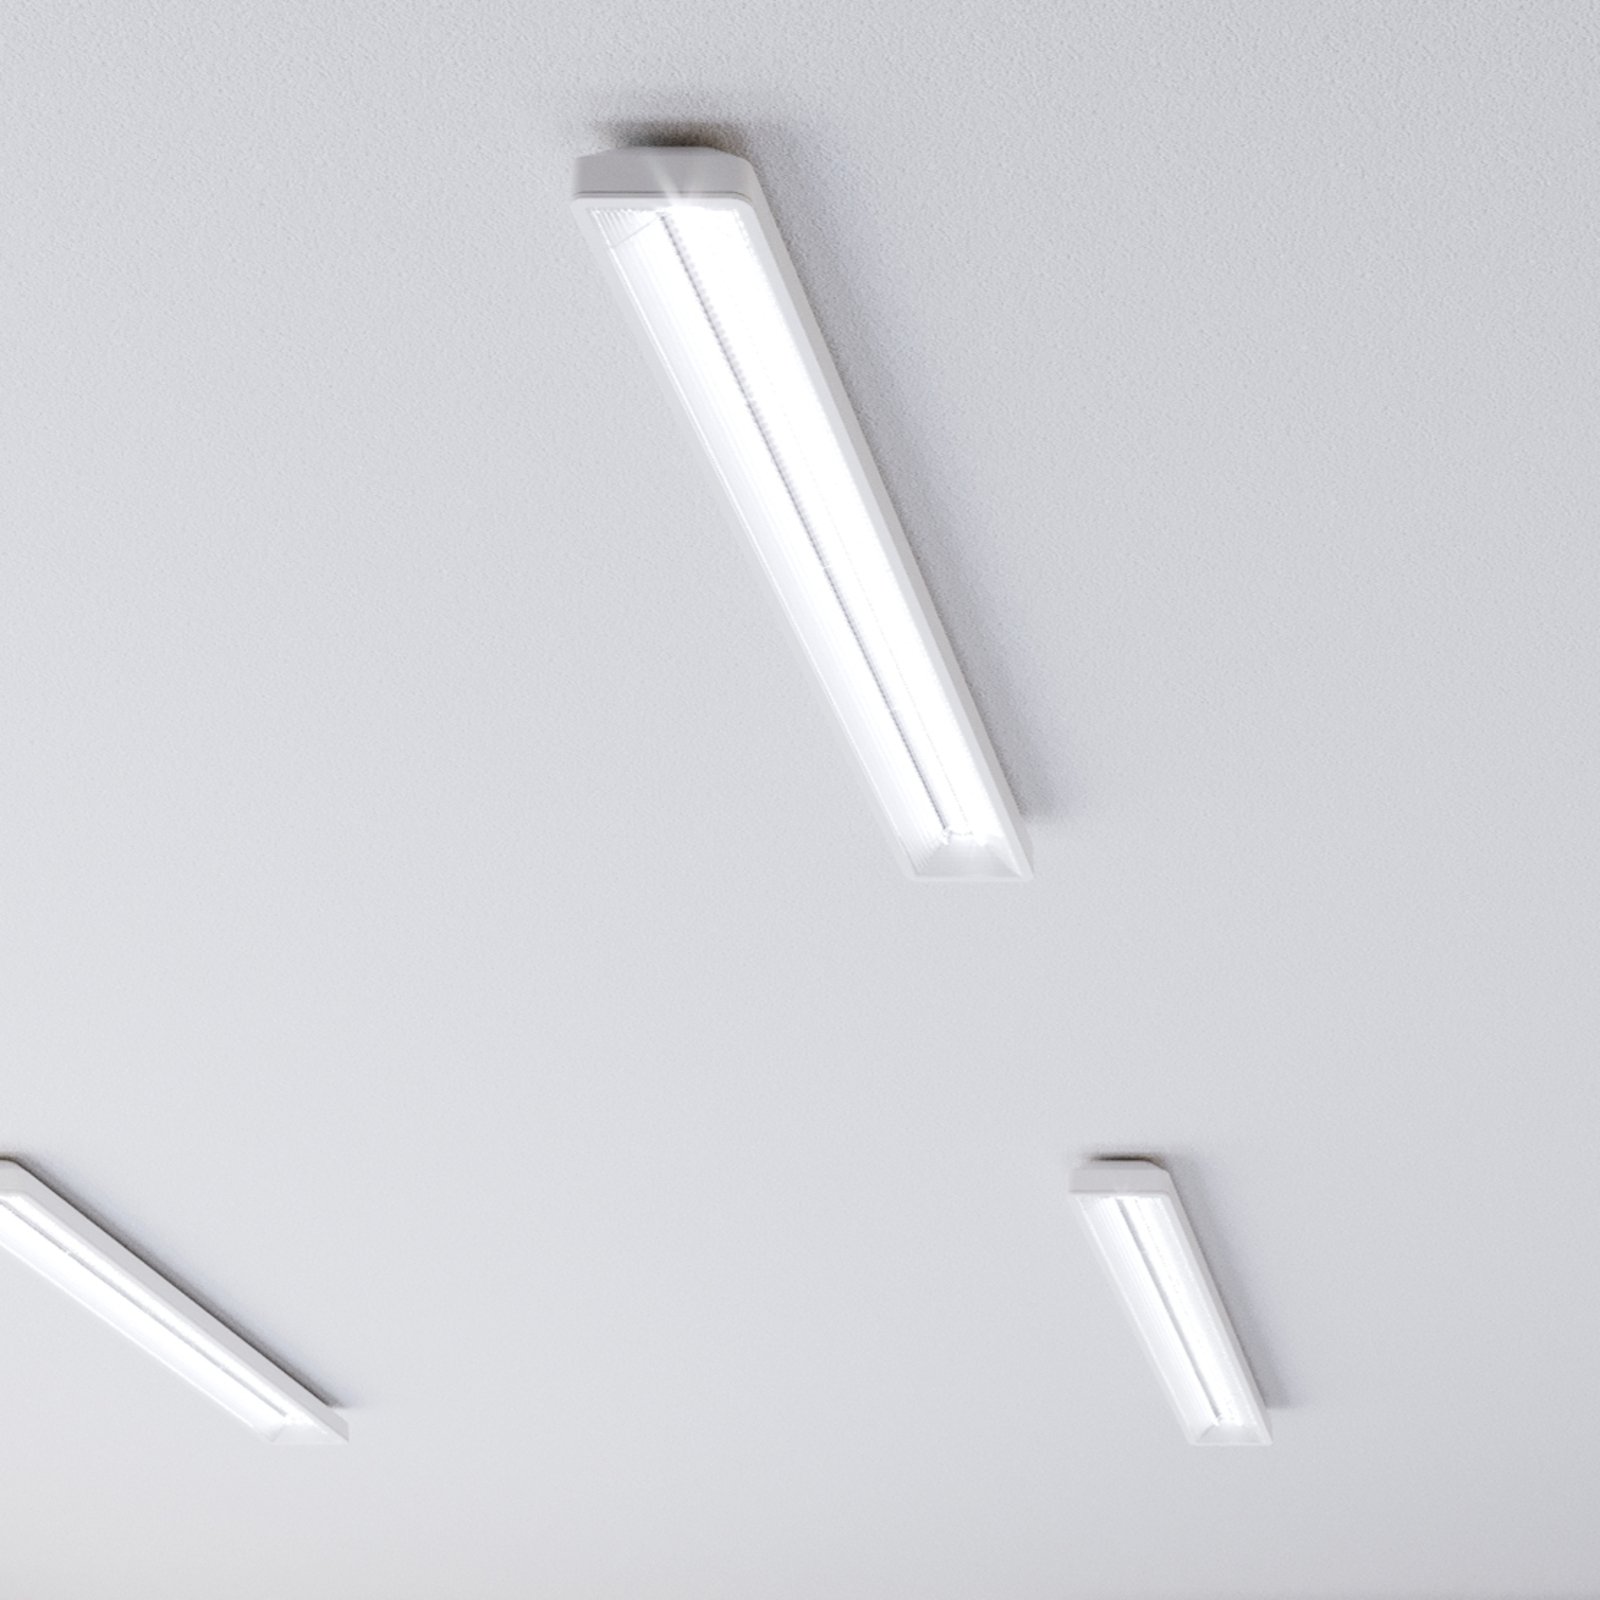 Siteco Taris LED ceiling light 151 cm DALI EB